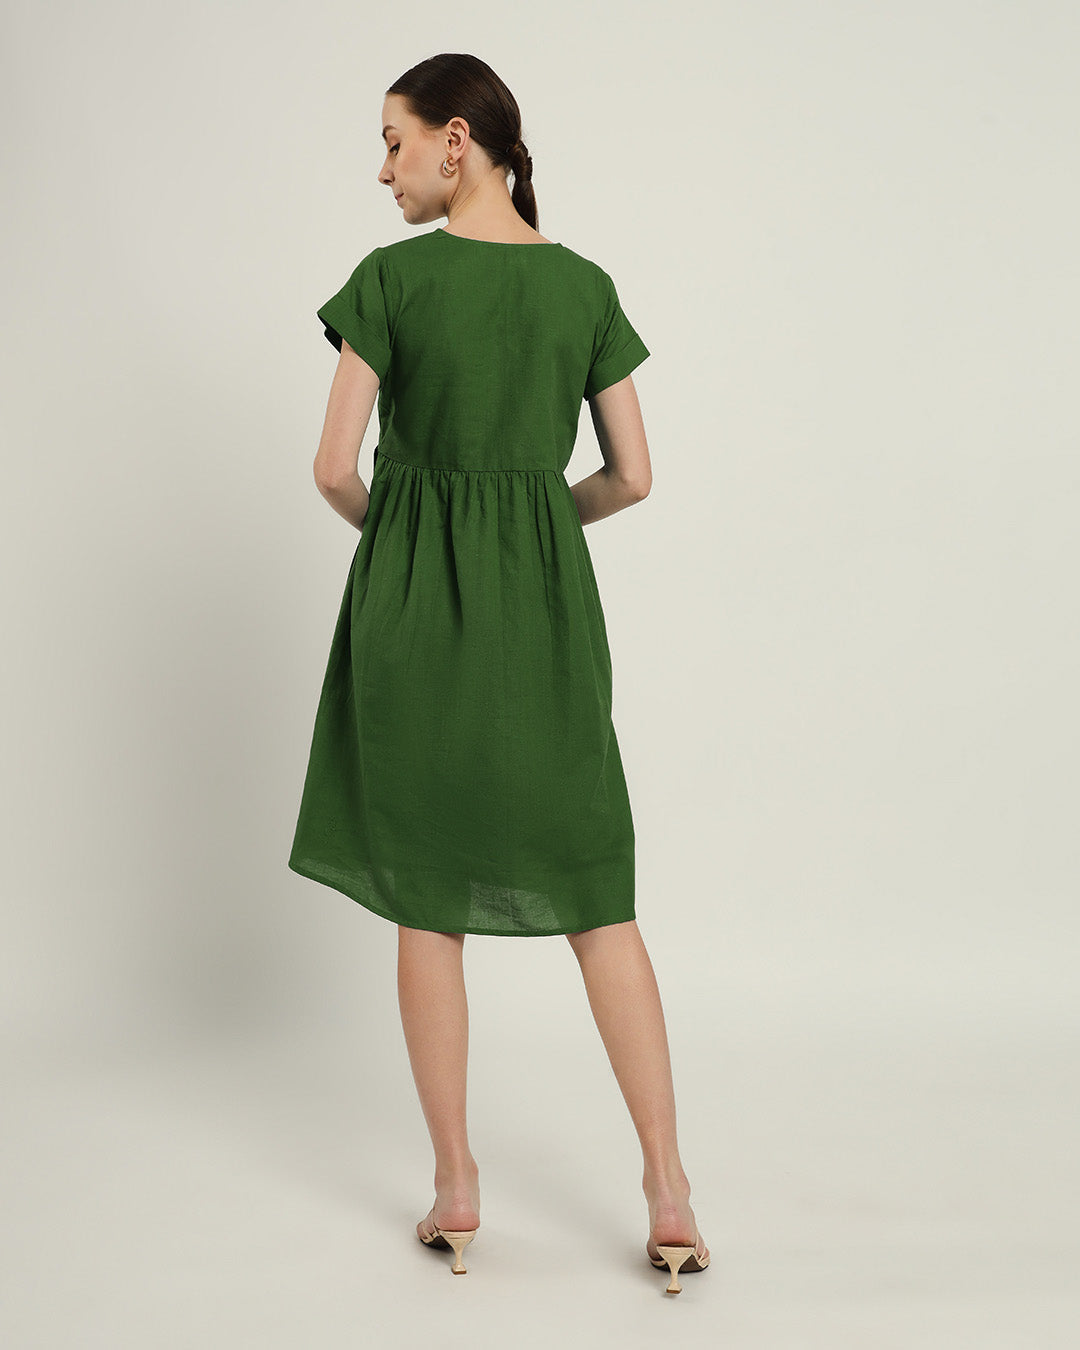 The Valence Emerald Cotton Dress